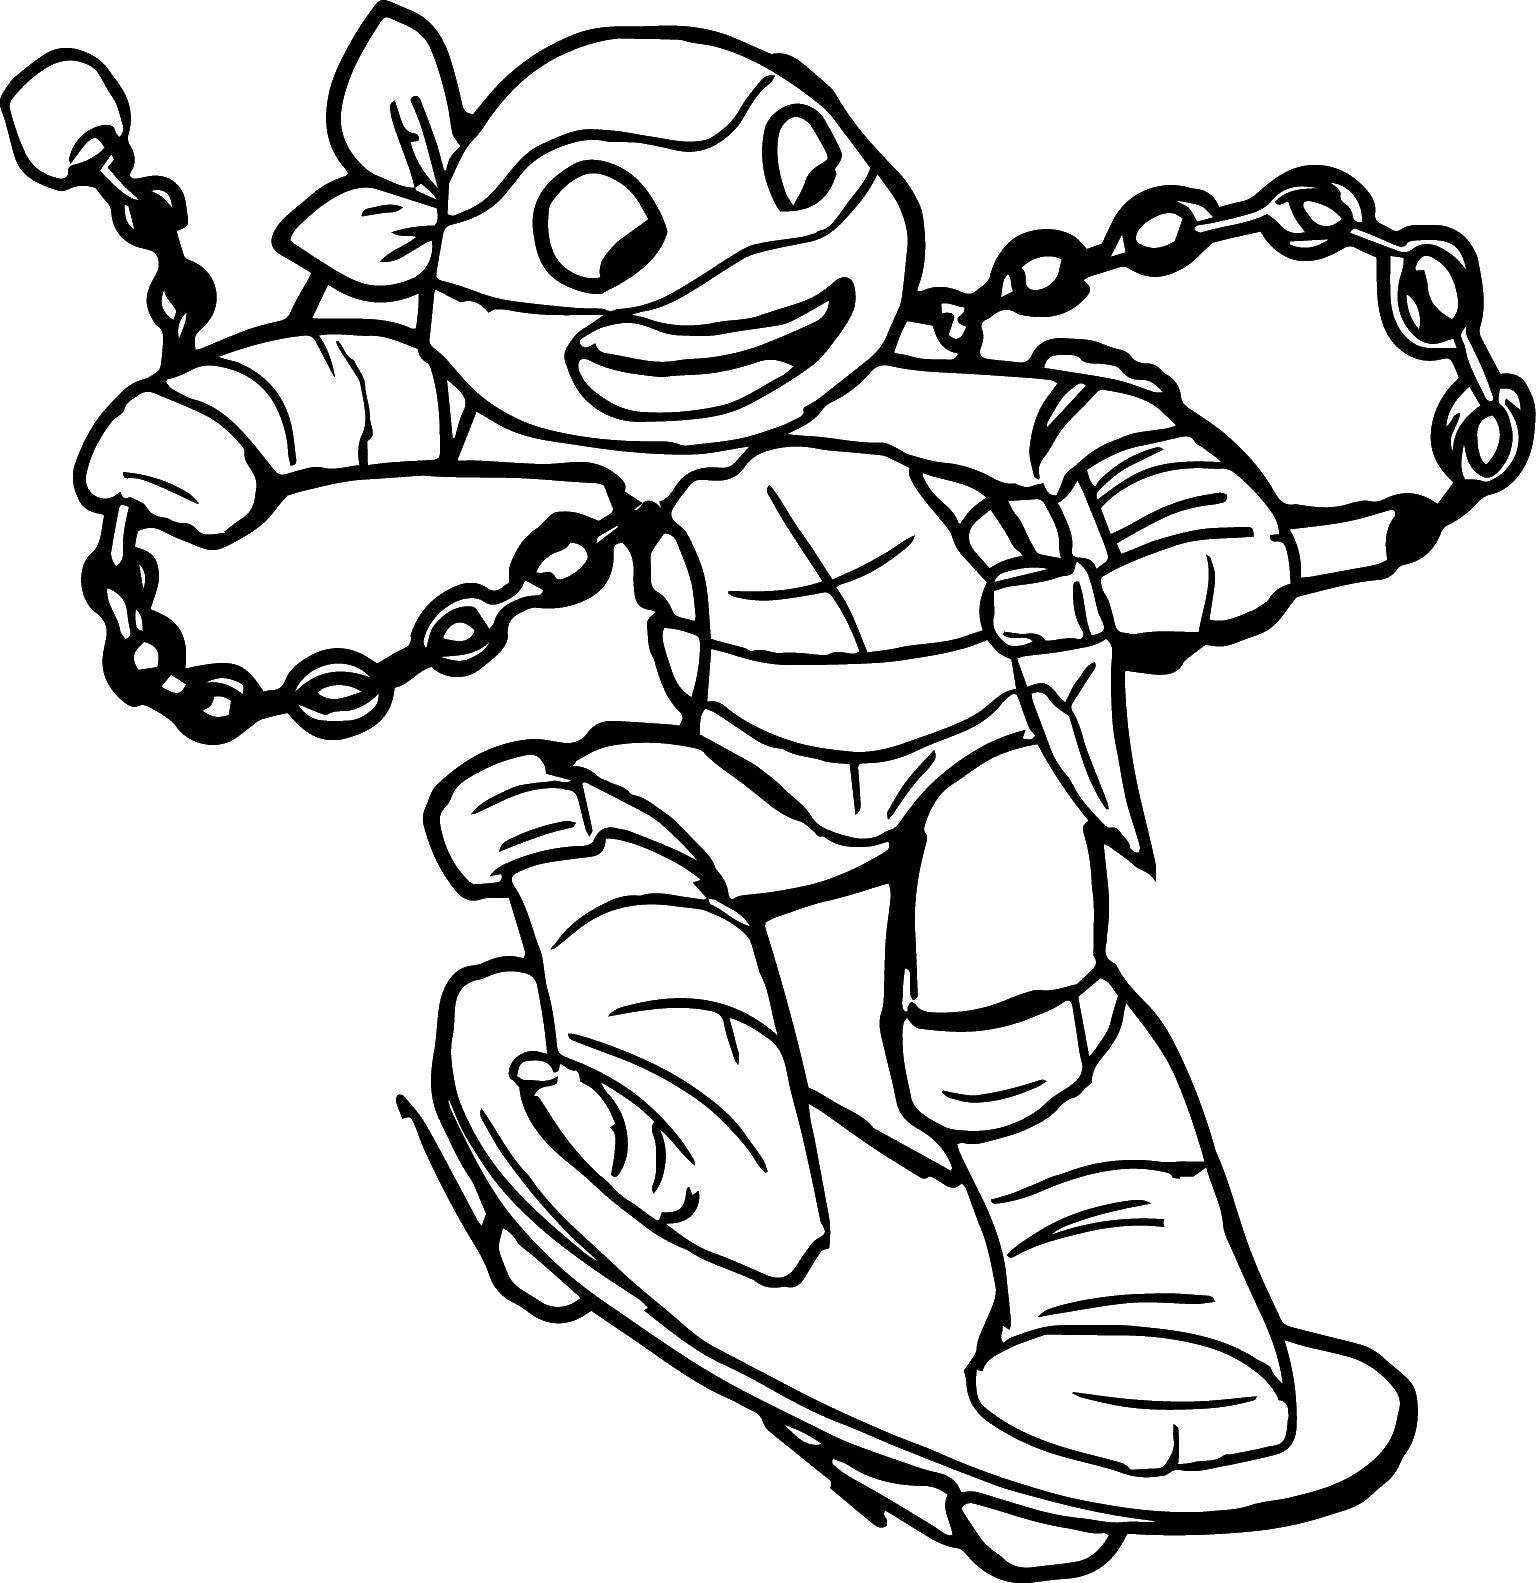 Coloring Michelangelo with a chain. Category teenage mutant ninja turtles. Tags:  Comics, Teenage Mutant Ninja Turtles.